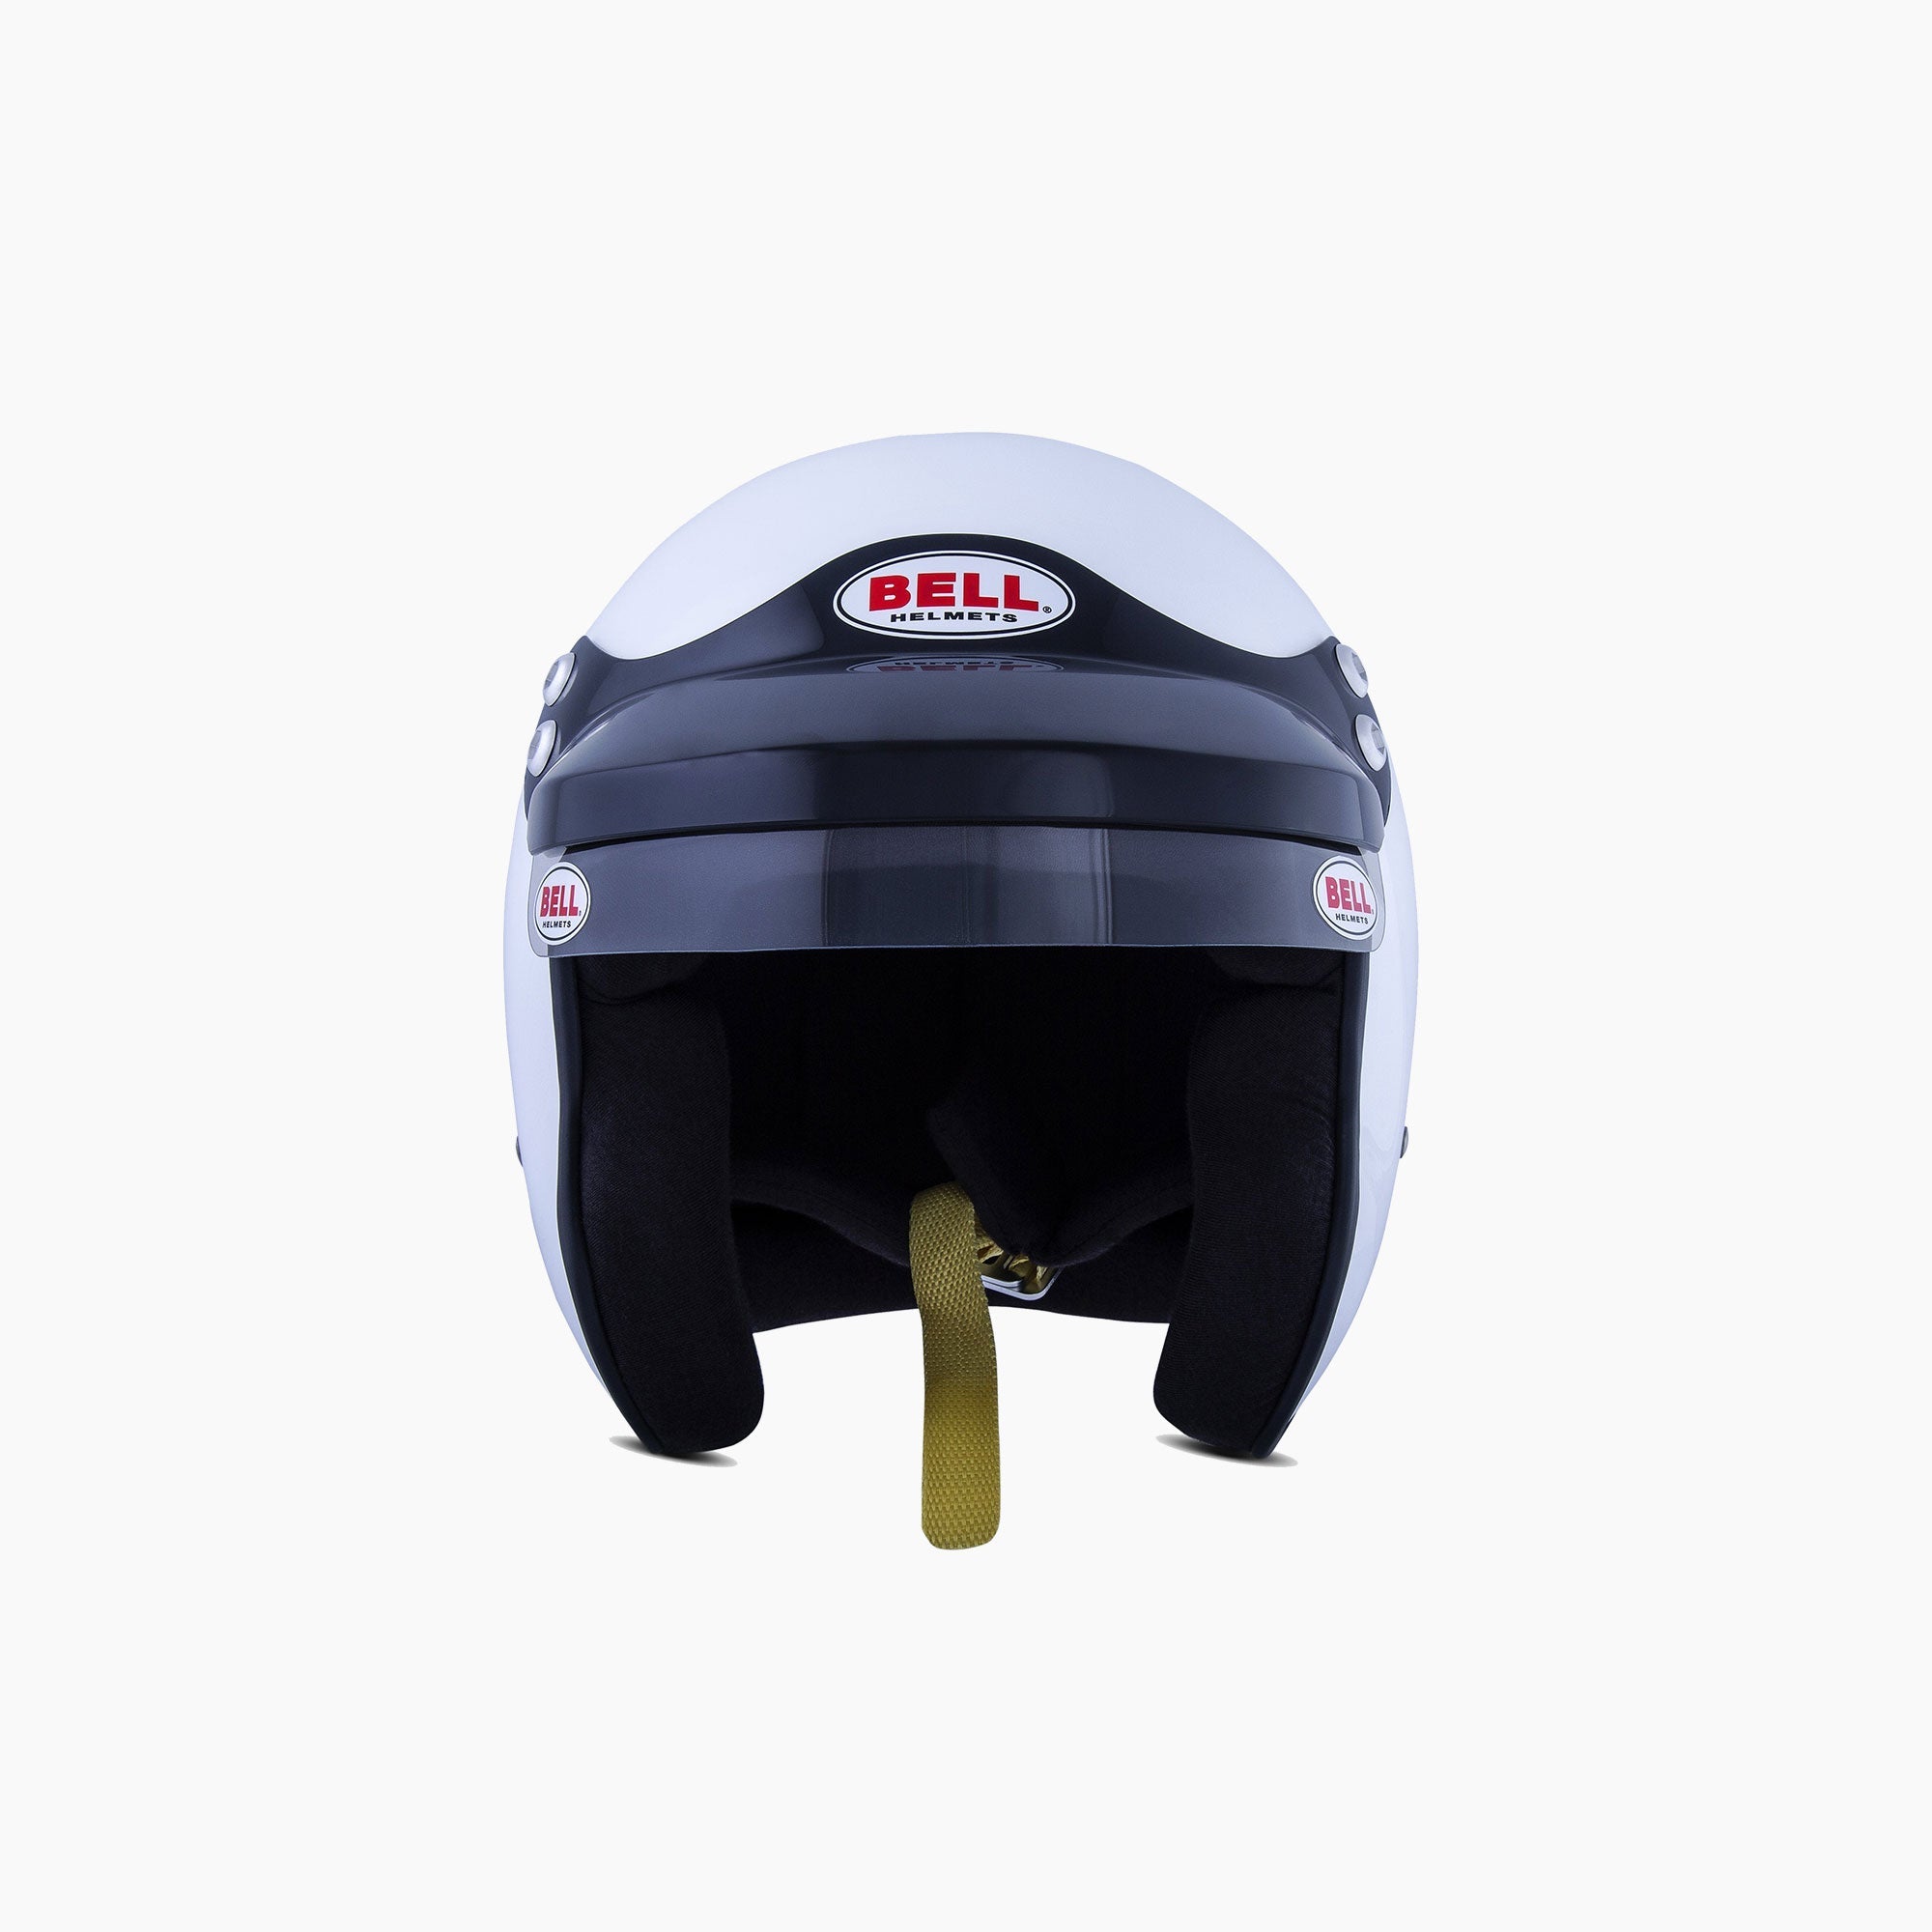 Bell Racing | MAG-1 (HANS) Racing Helmet-Racing Helmet-Bell Racing-gpx-store